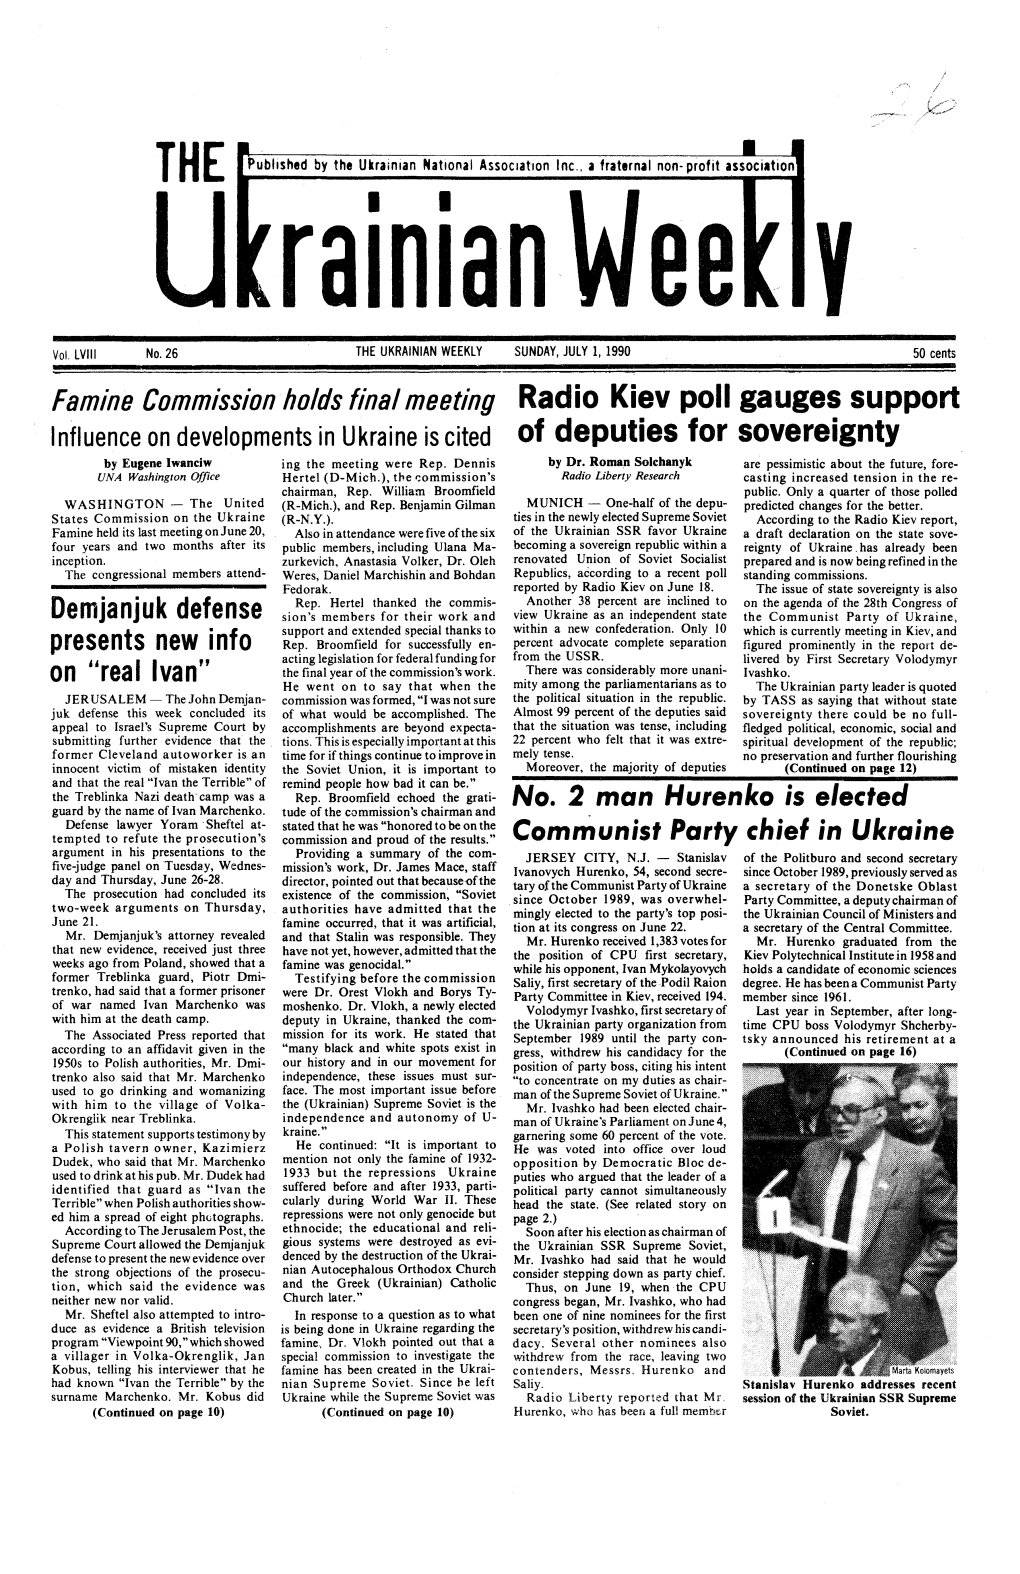 The Ukrainian Weekly 1990, No.26